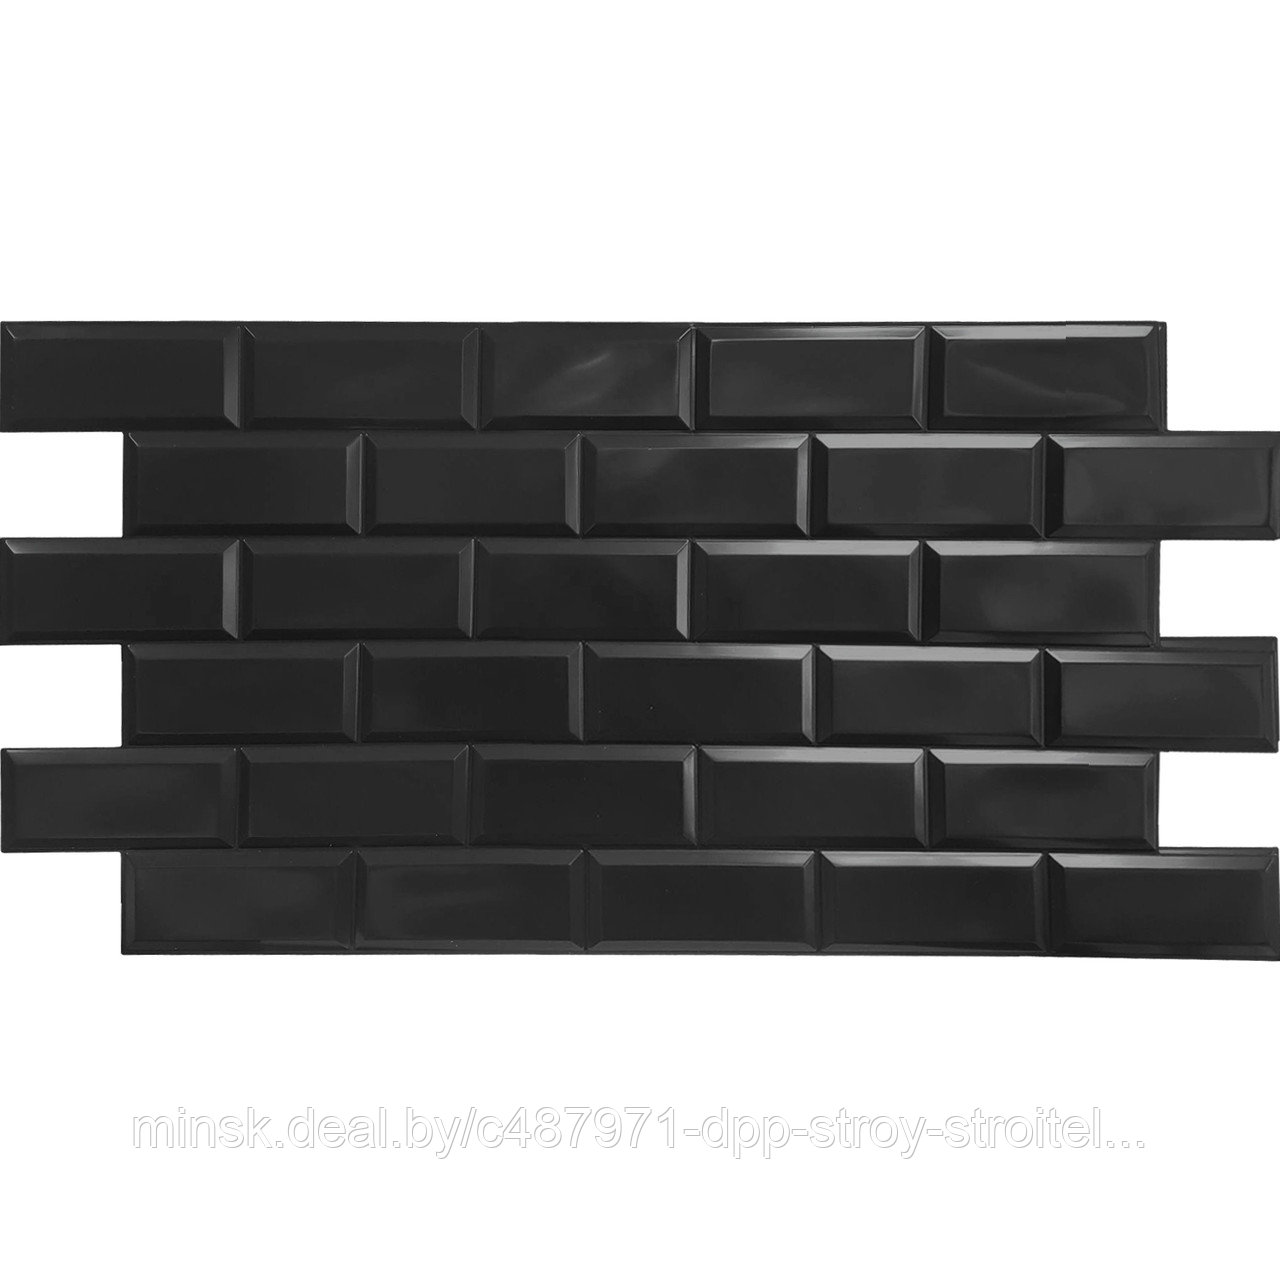 Панель ПВХ Блок черный /PVC Panel Black unit 966х484 мм